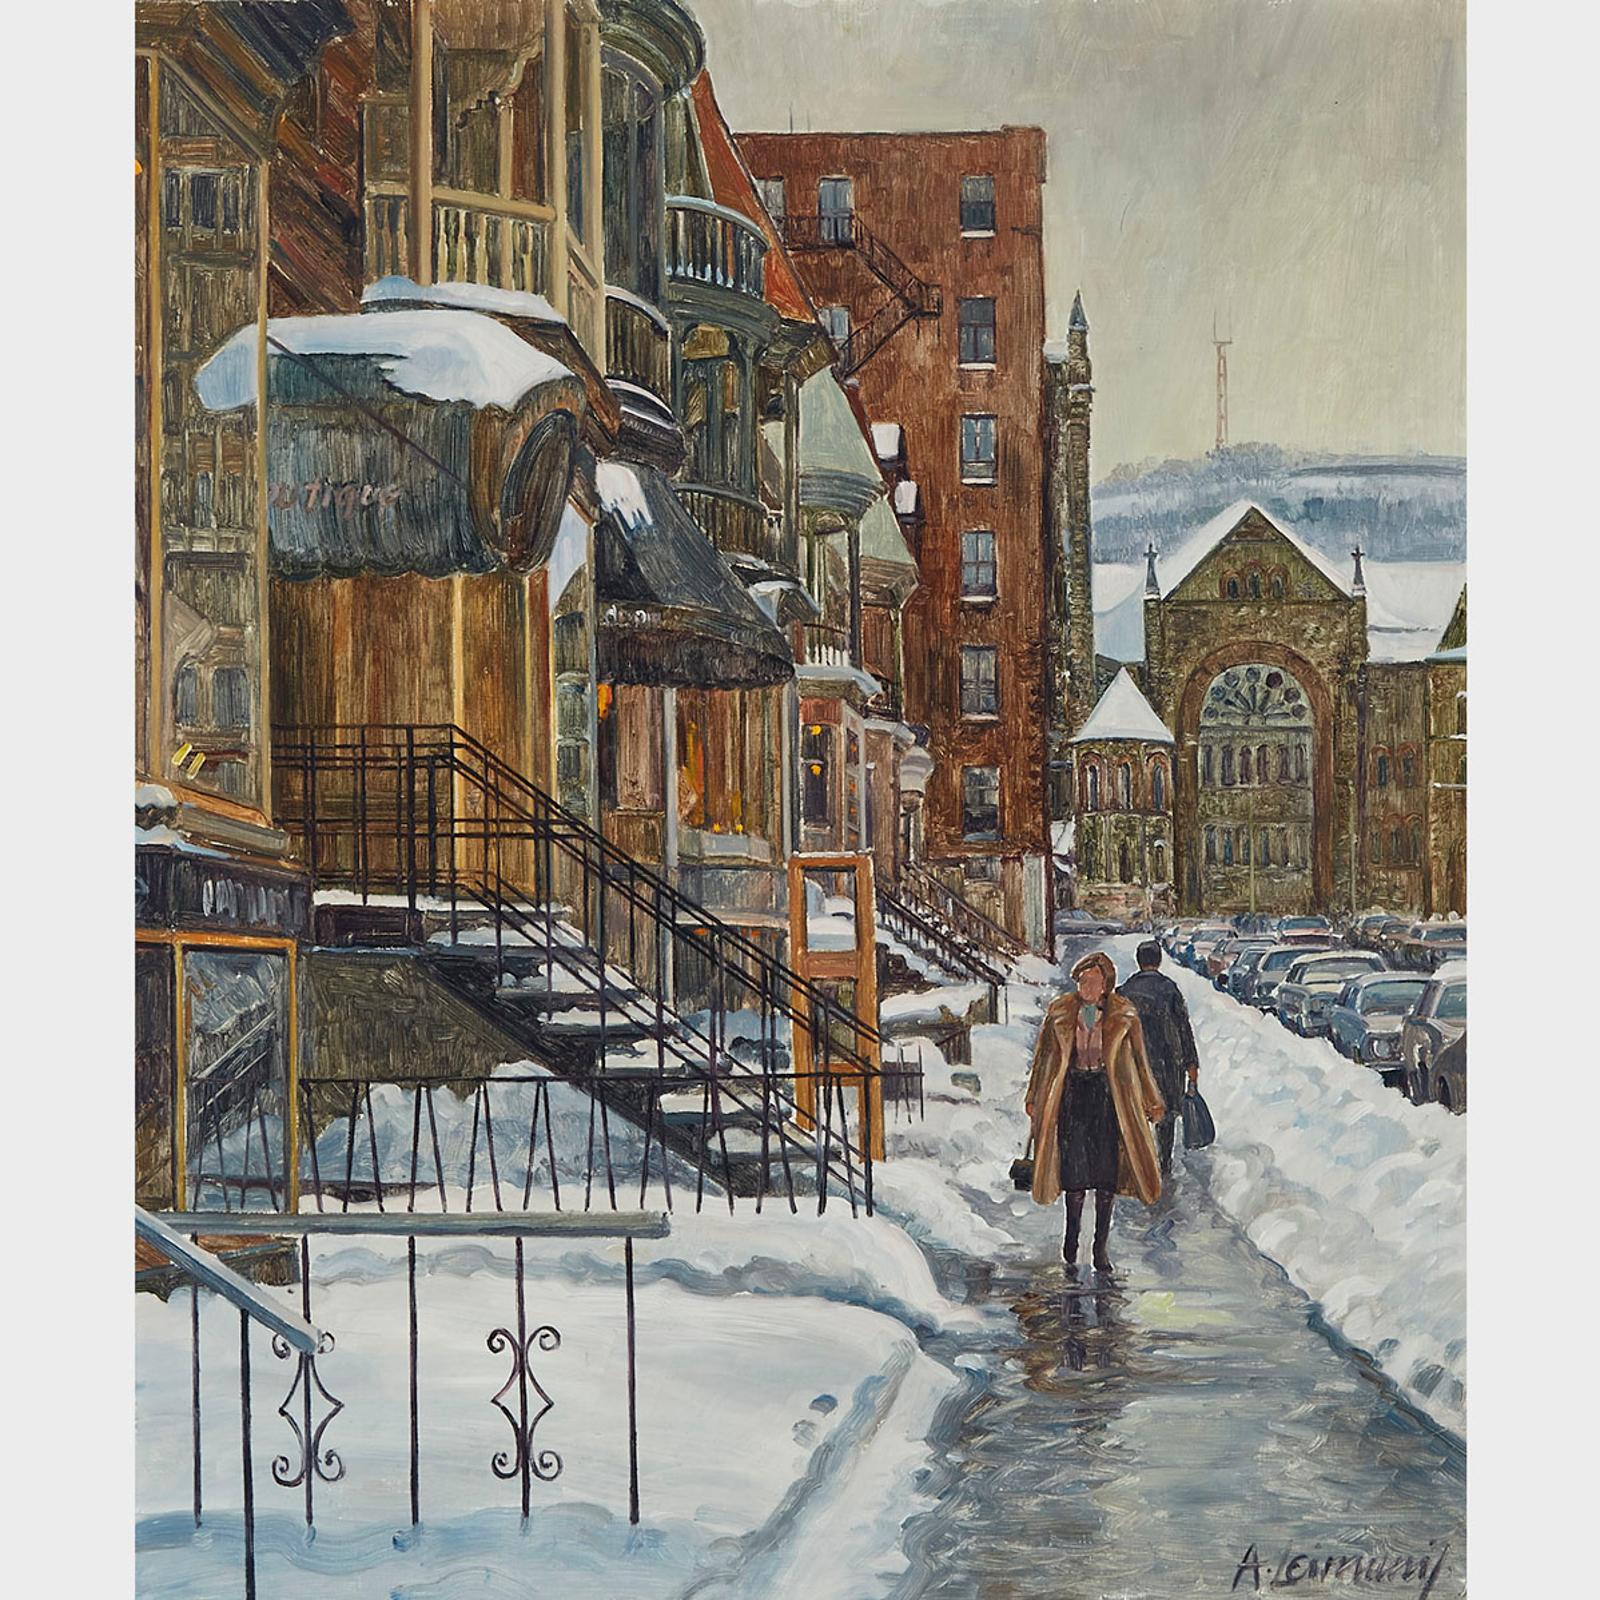 Andris Leimanis (1938) - Melting Snow, 1979